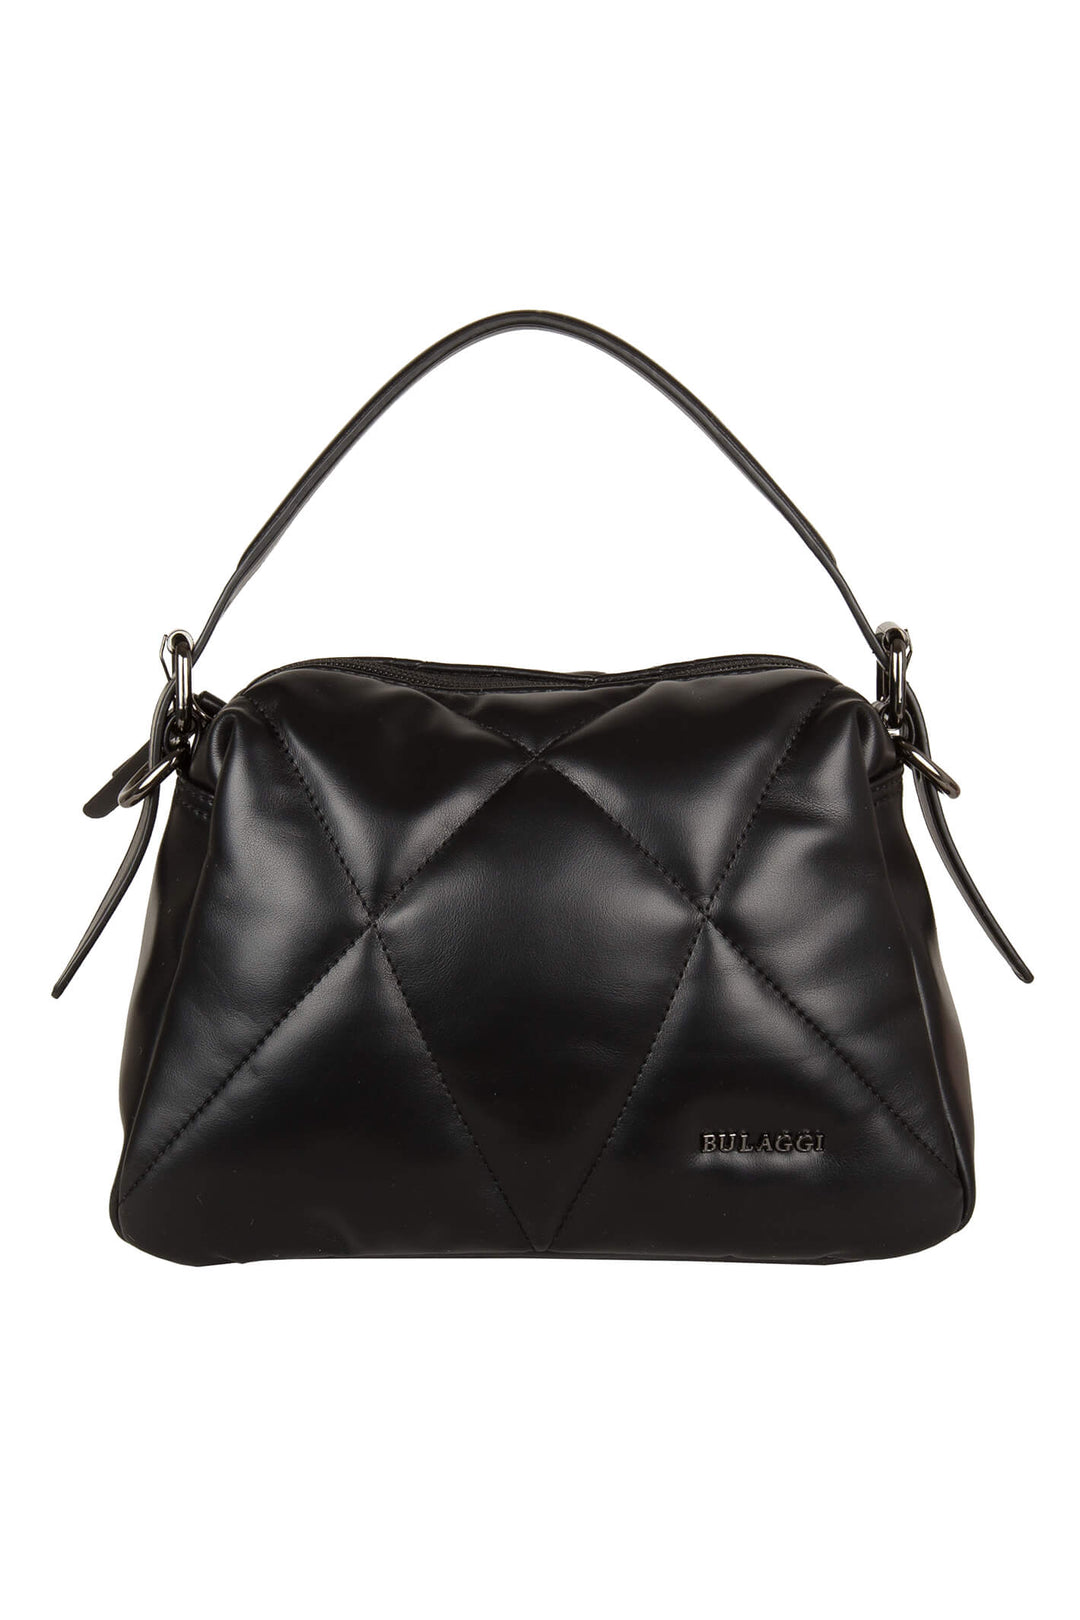 Bulaggi Leona 31231.10 Black Handbag - Shirley Allum Boutique